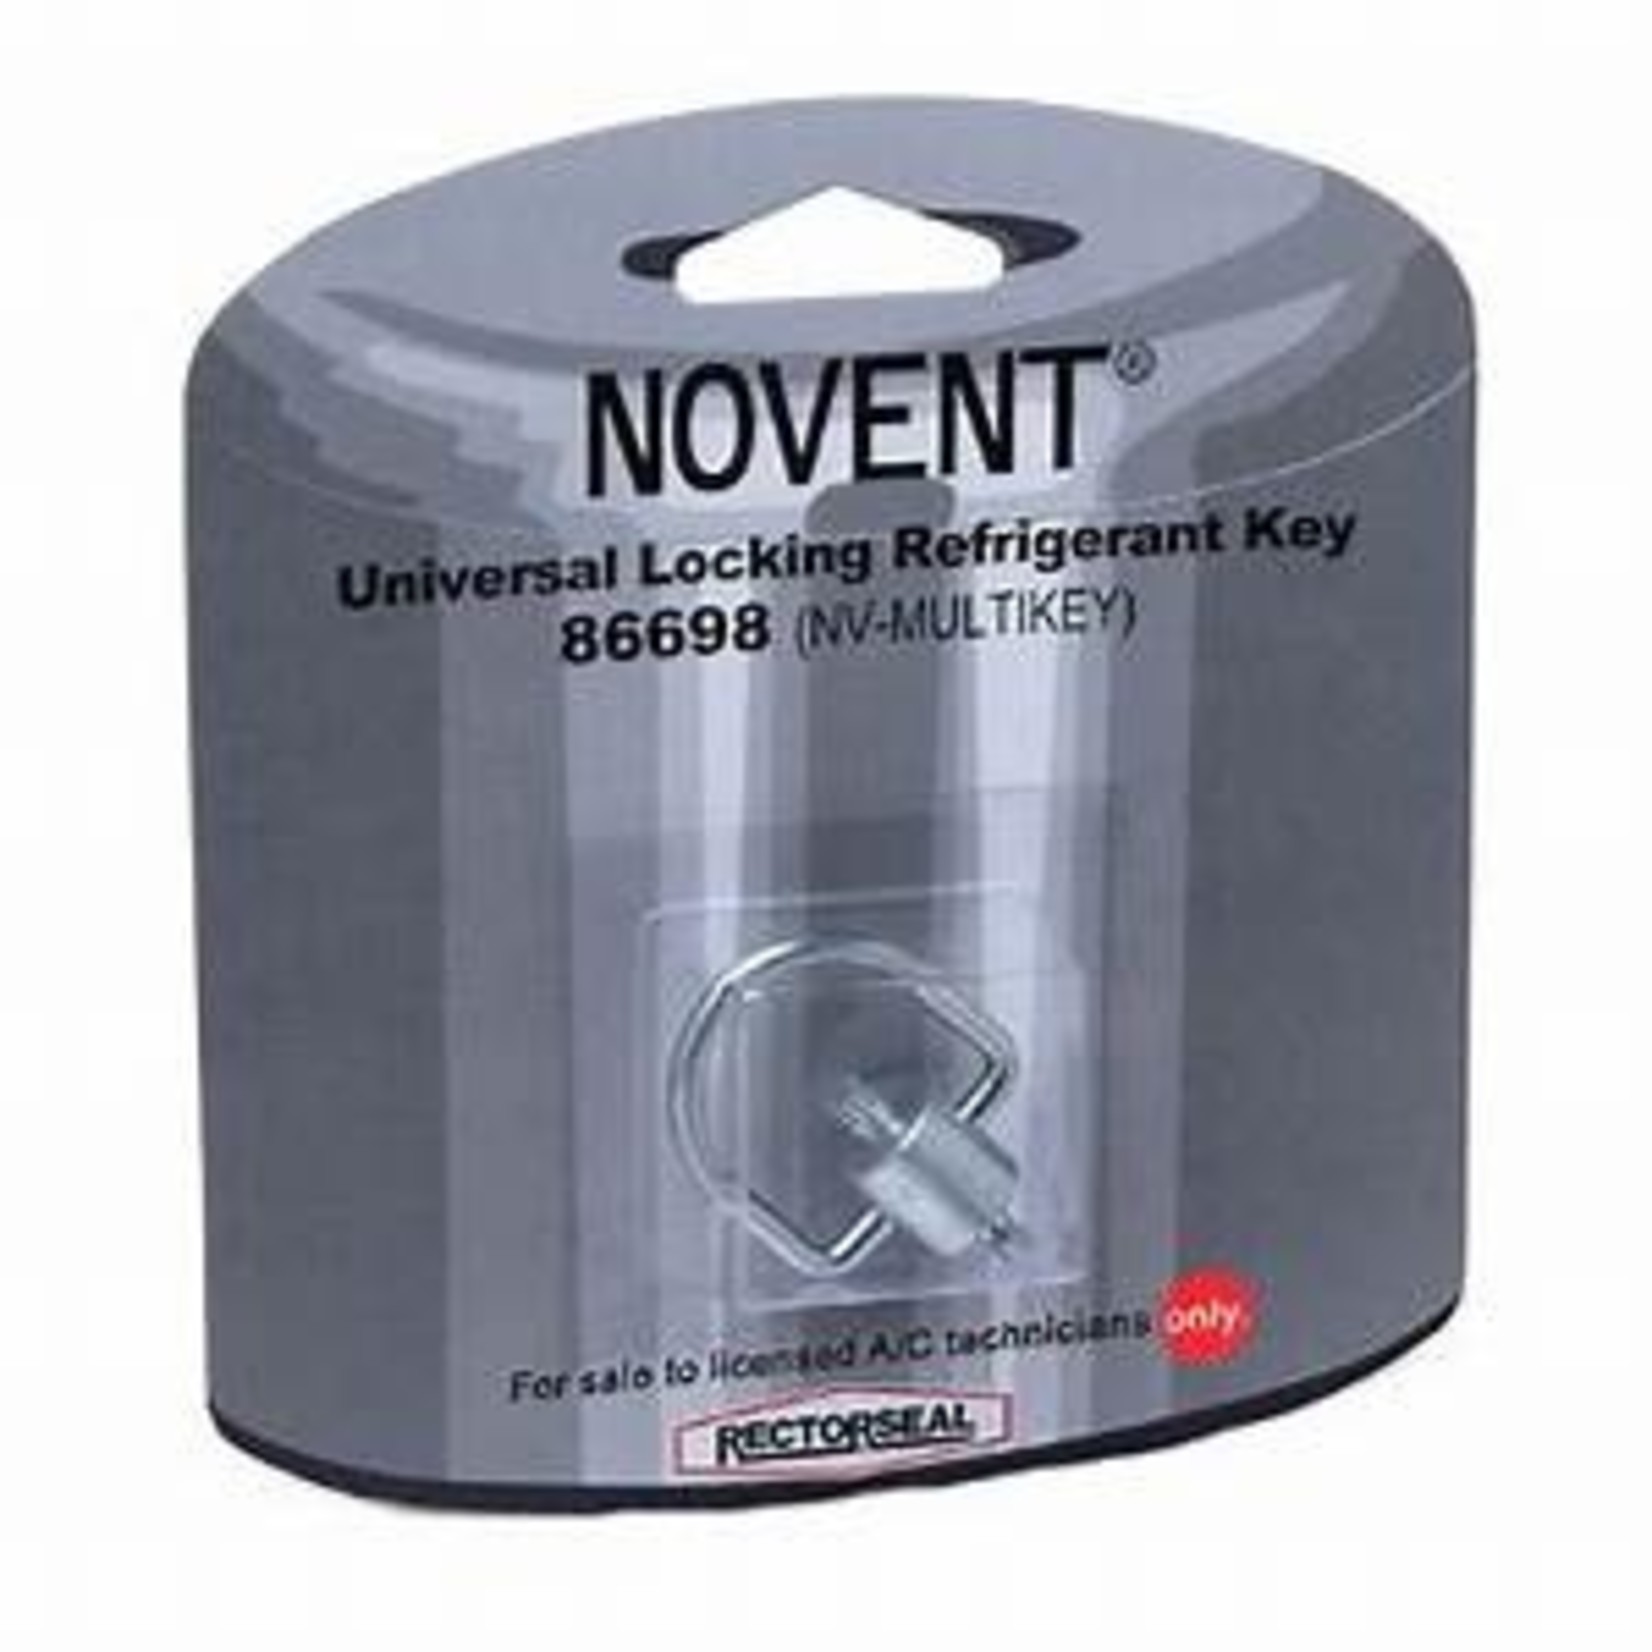 Novent Novent Universal Locking Key